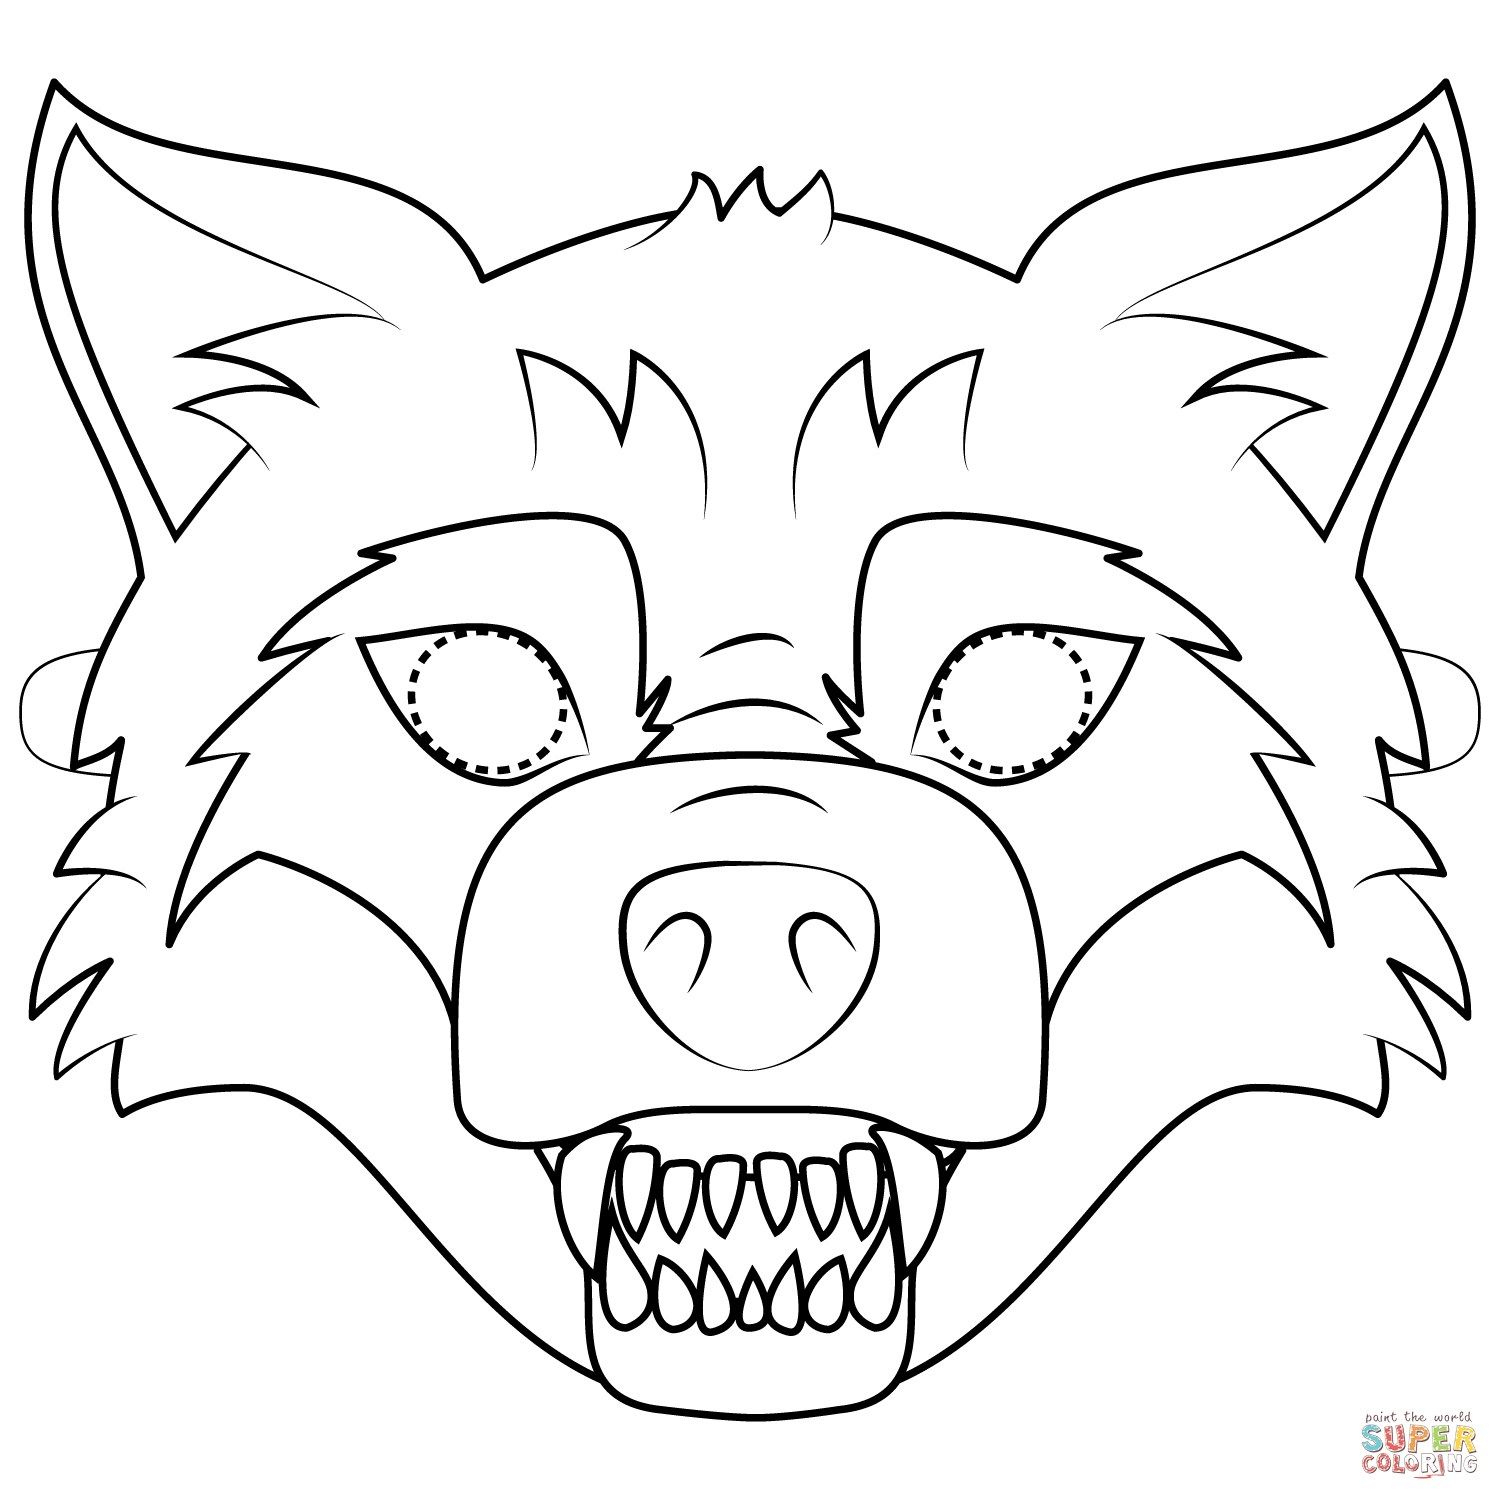 Mask Coloring Pages Big Bad Wolf Mask Coloring Page Free innen Masken Zum Ausdrucken Kostenlos